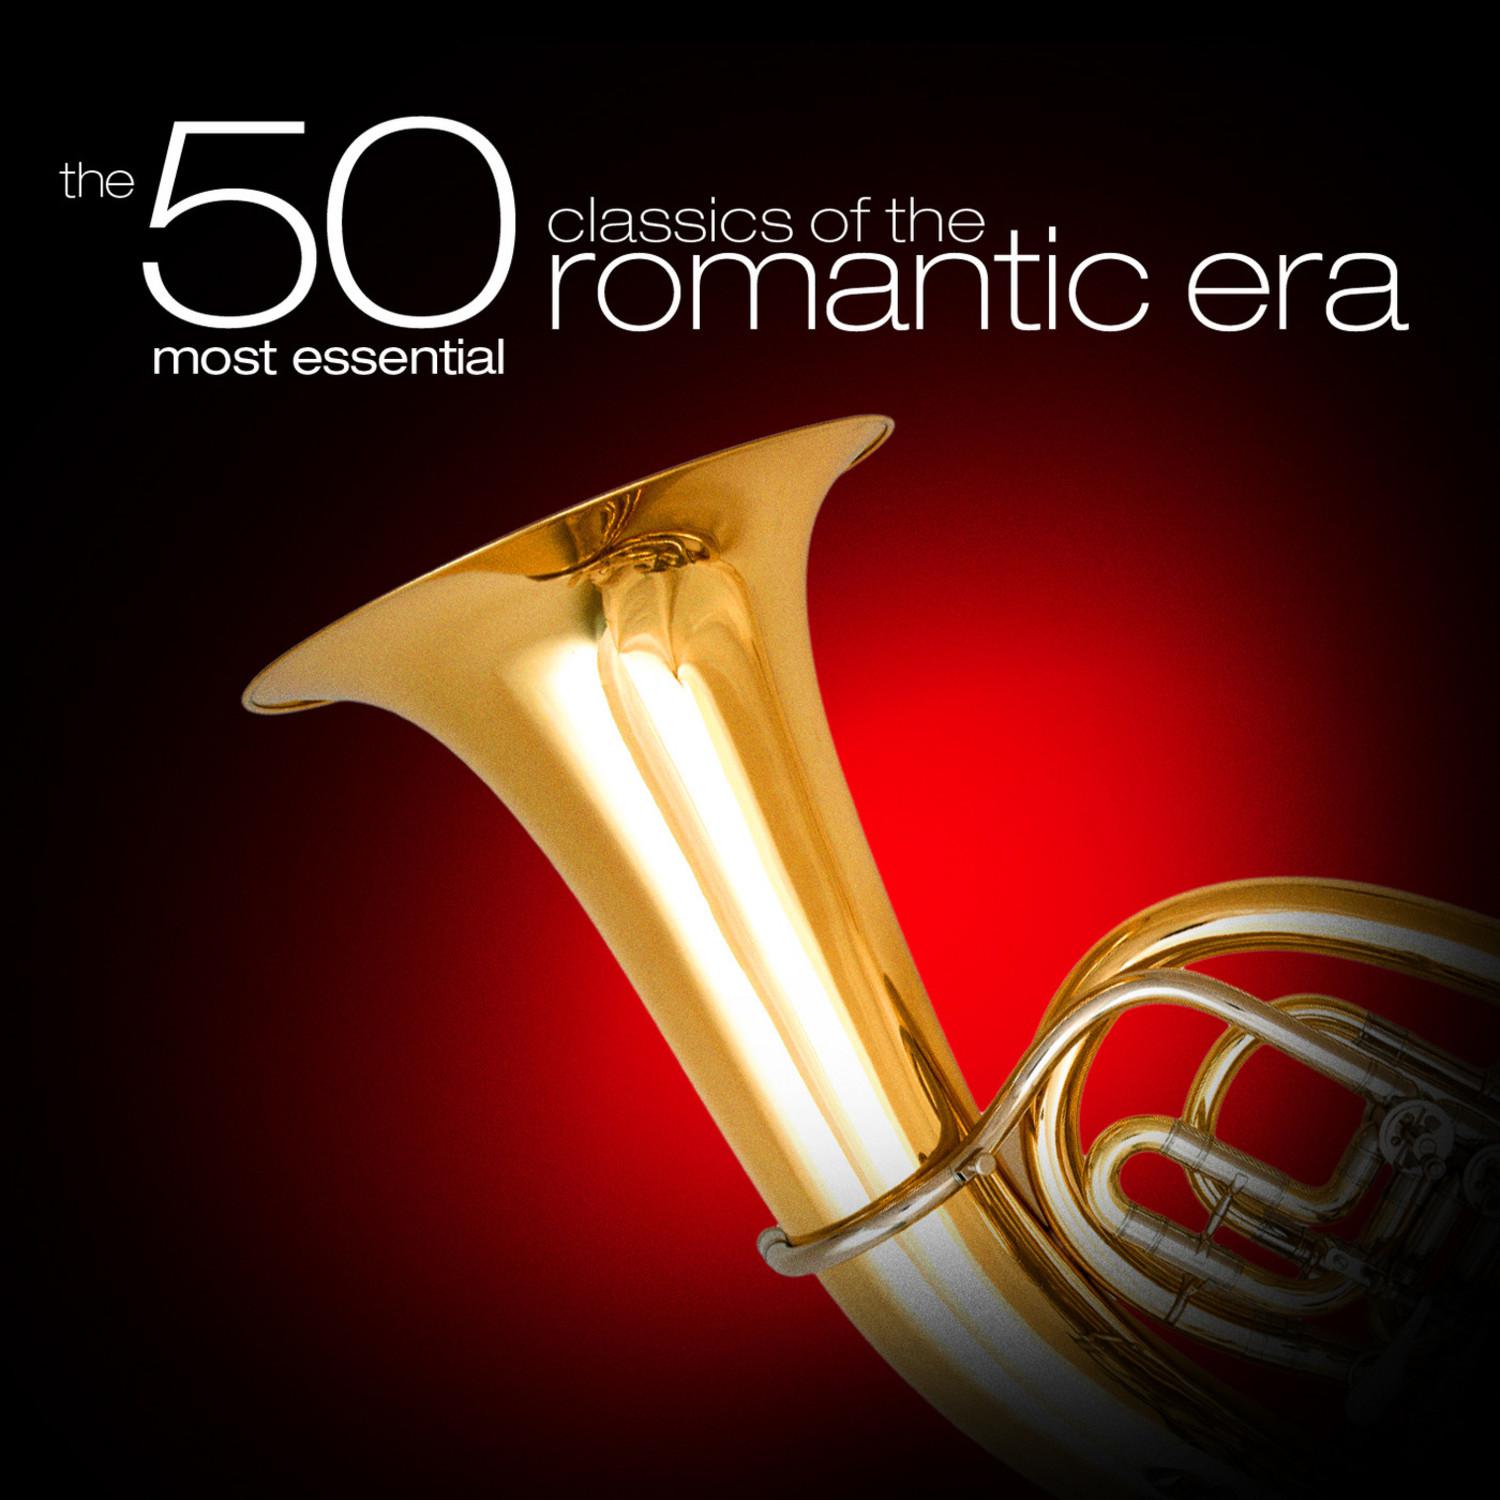 The 50 Most Essential Classics of the Romantic Era